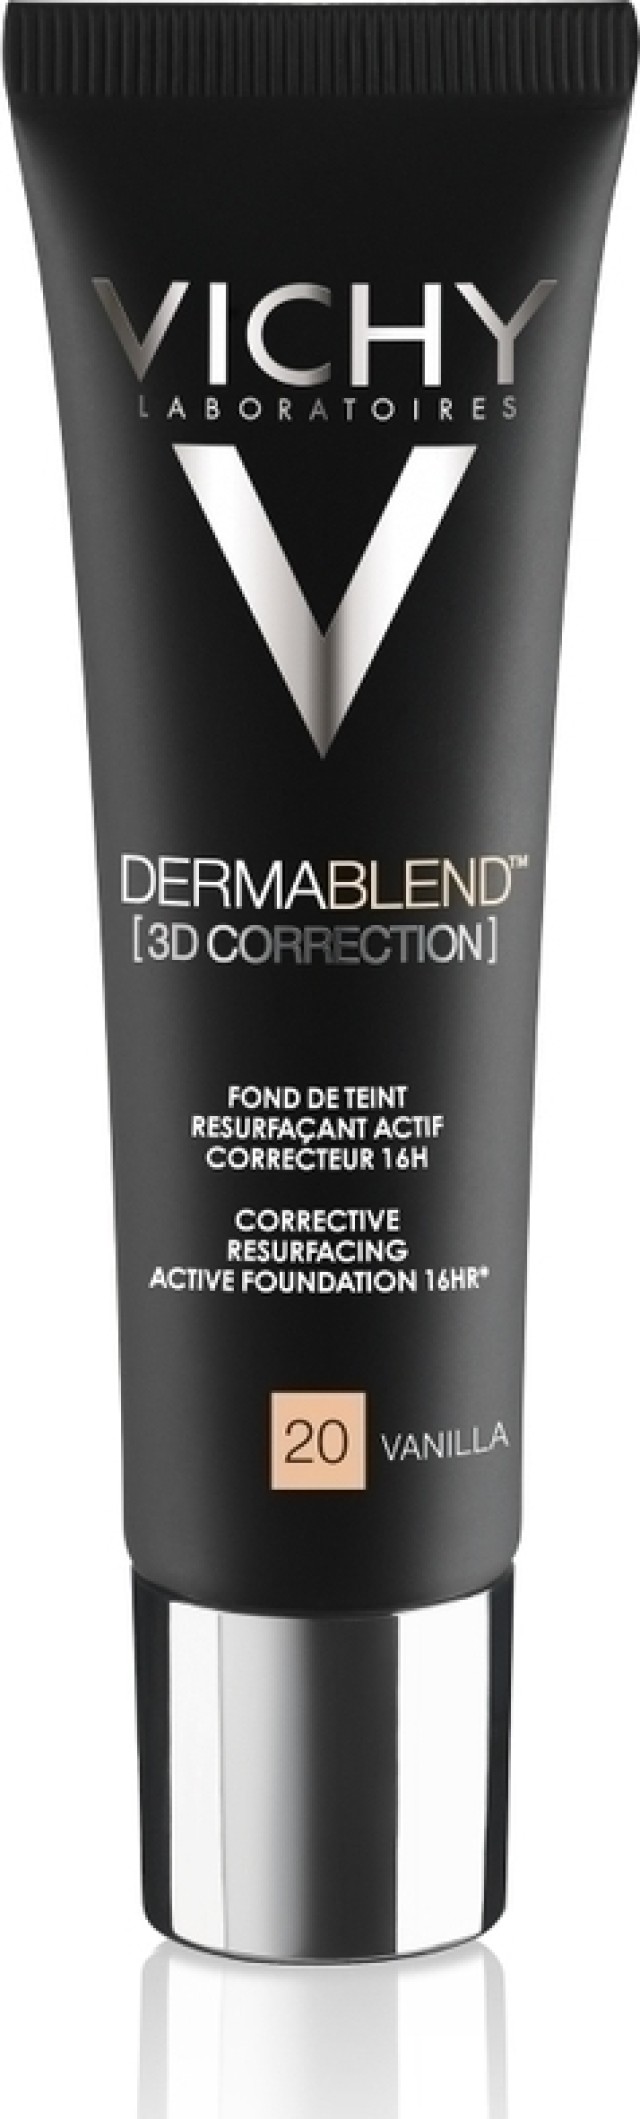 Vichy Dermablend 3D Correction 20 Vanilla Διορθωτικό Make Up Προσώπου 30ml